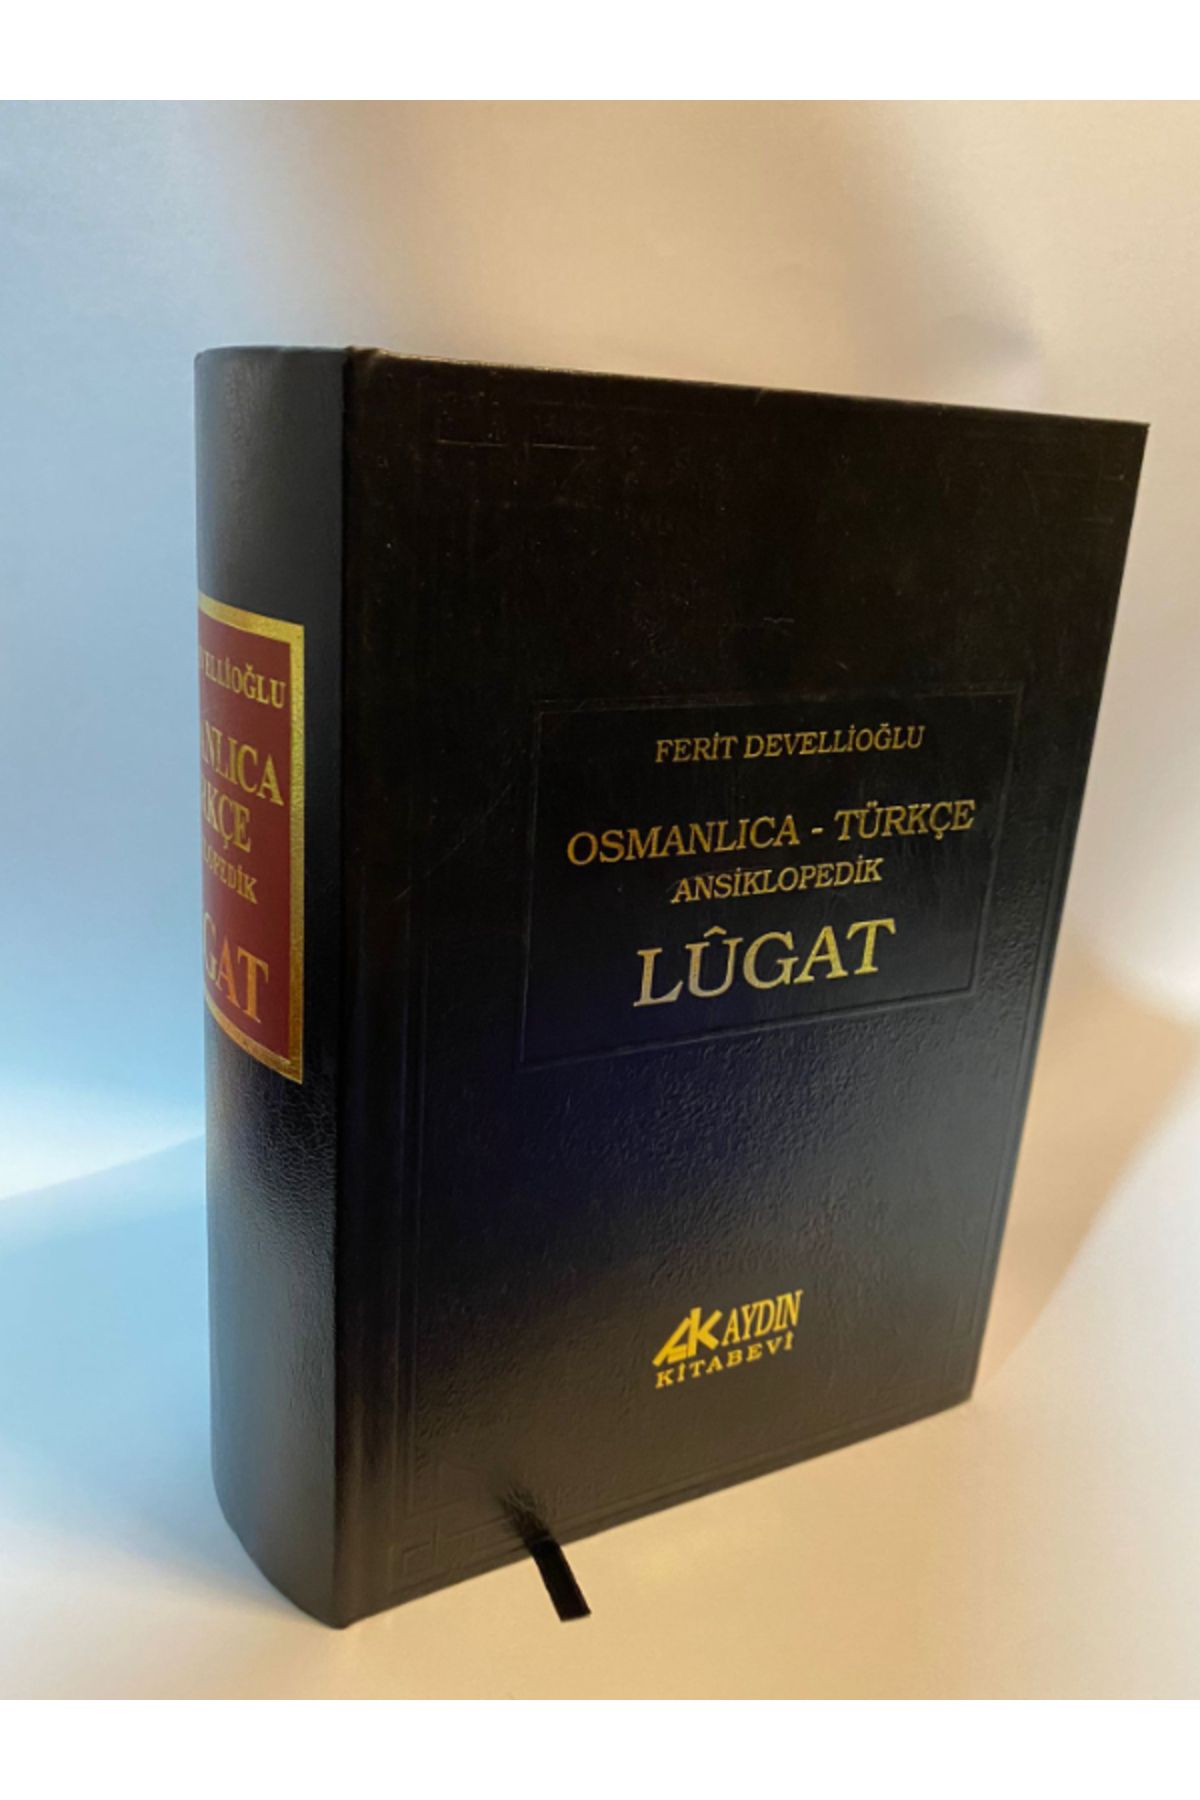 Aydın Kitabevi Osmanlıca-Türkçe Ansiklopedik Lugat